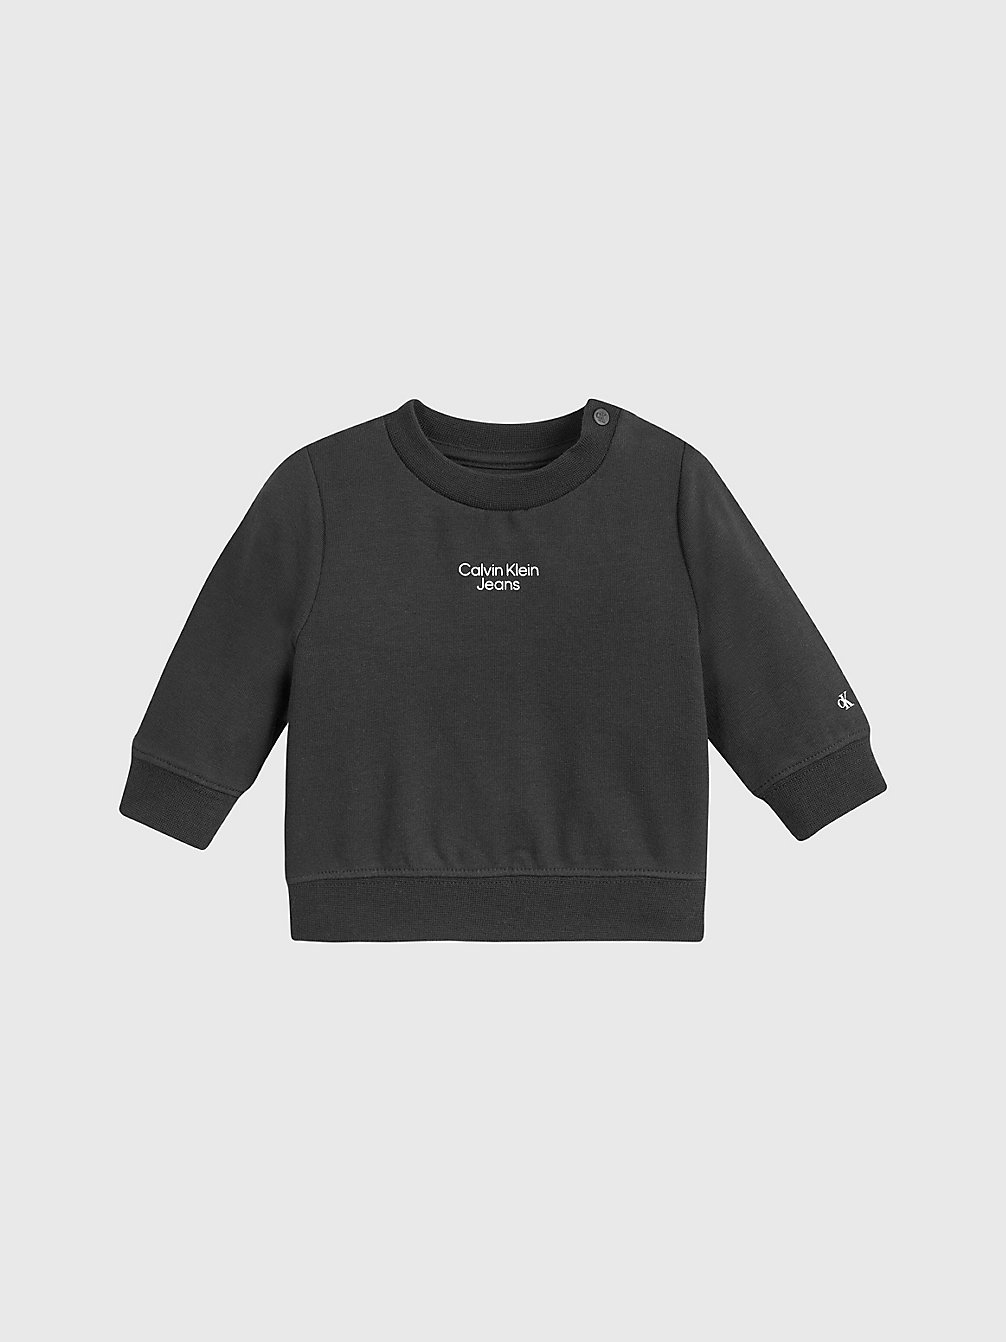 CK BLACK Newborn-Sweatshirt Van Biologisch Katoen undefined newborn Calvin Klein